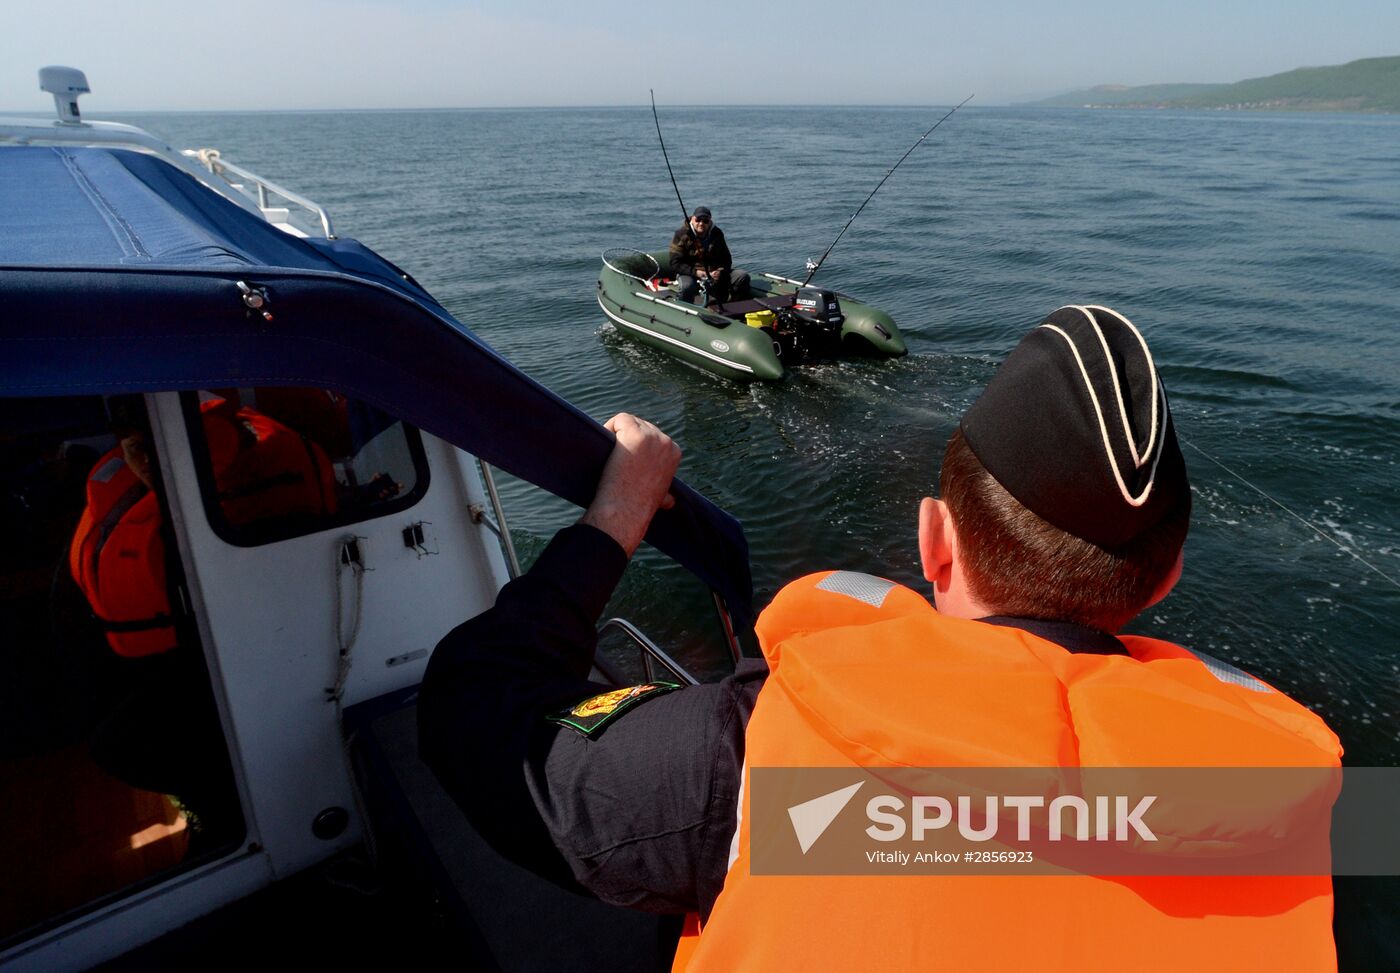 Primorye Territory coast guards's raid to check fishing